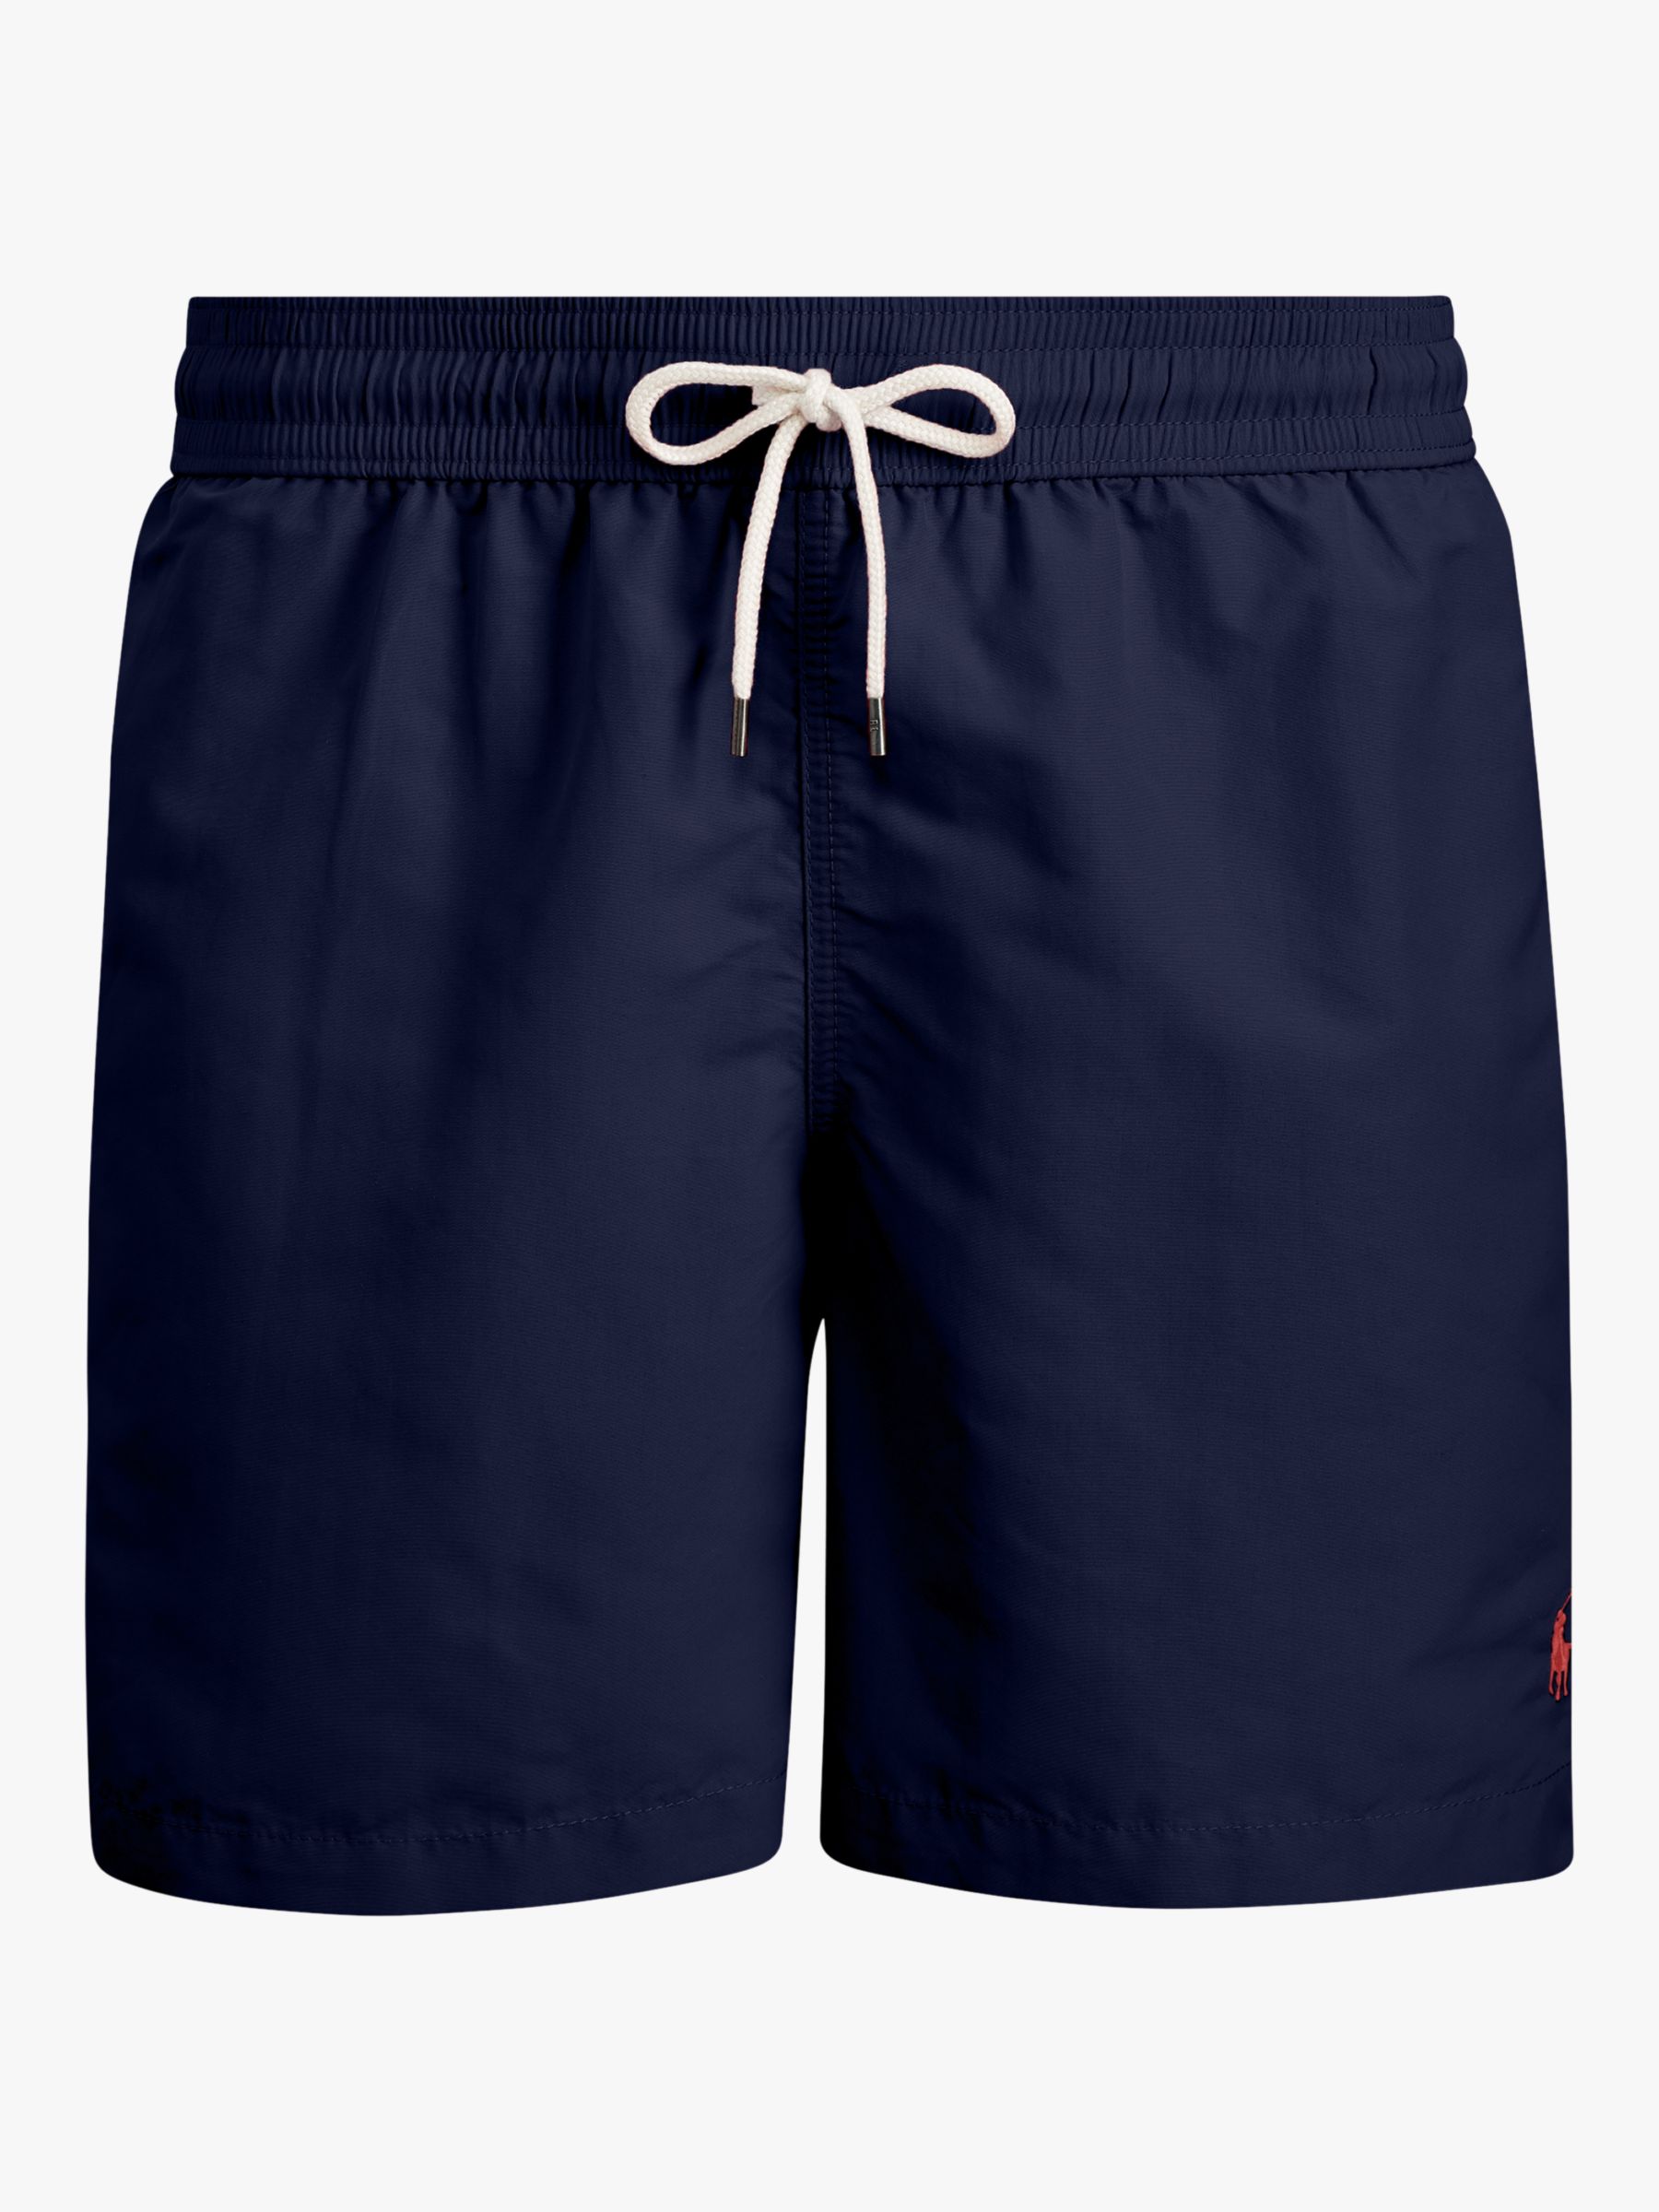 Polo Ralph Lauren Traveller Swim Shorts, Navy at John Lewis & Partners